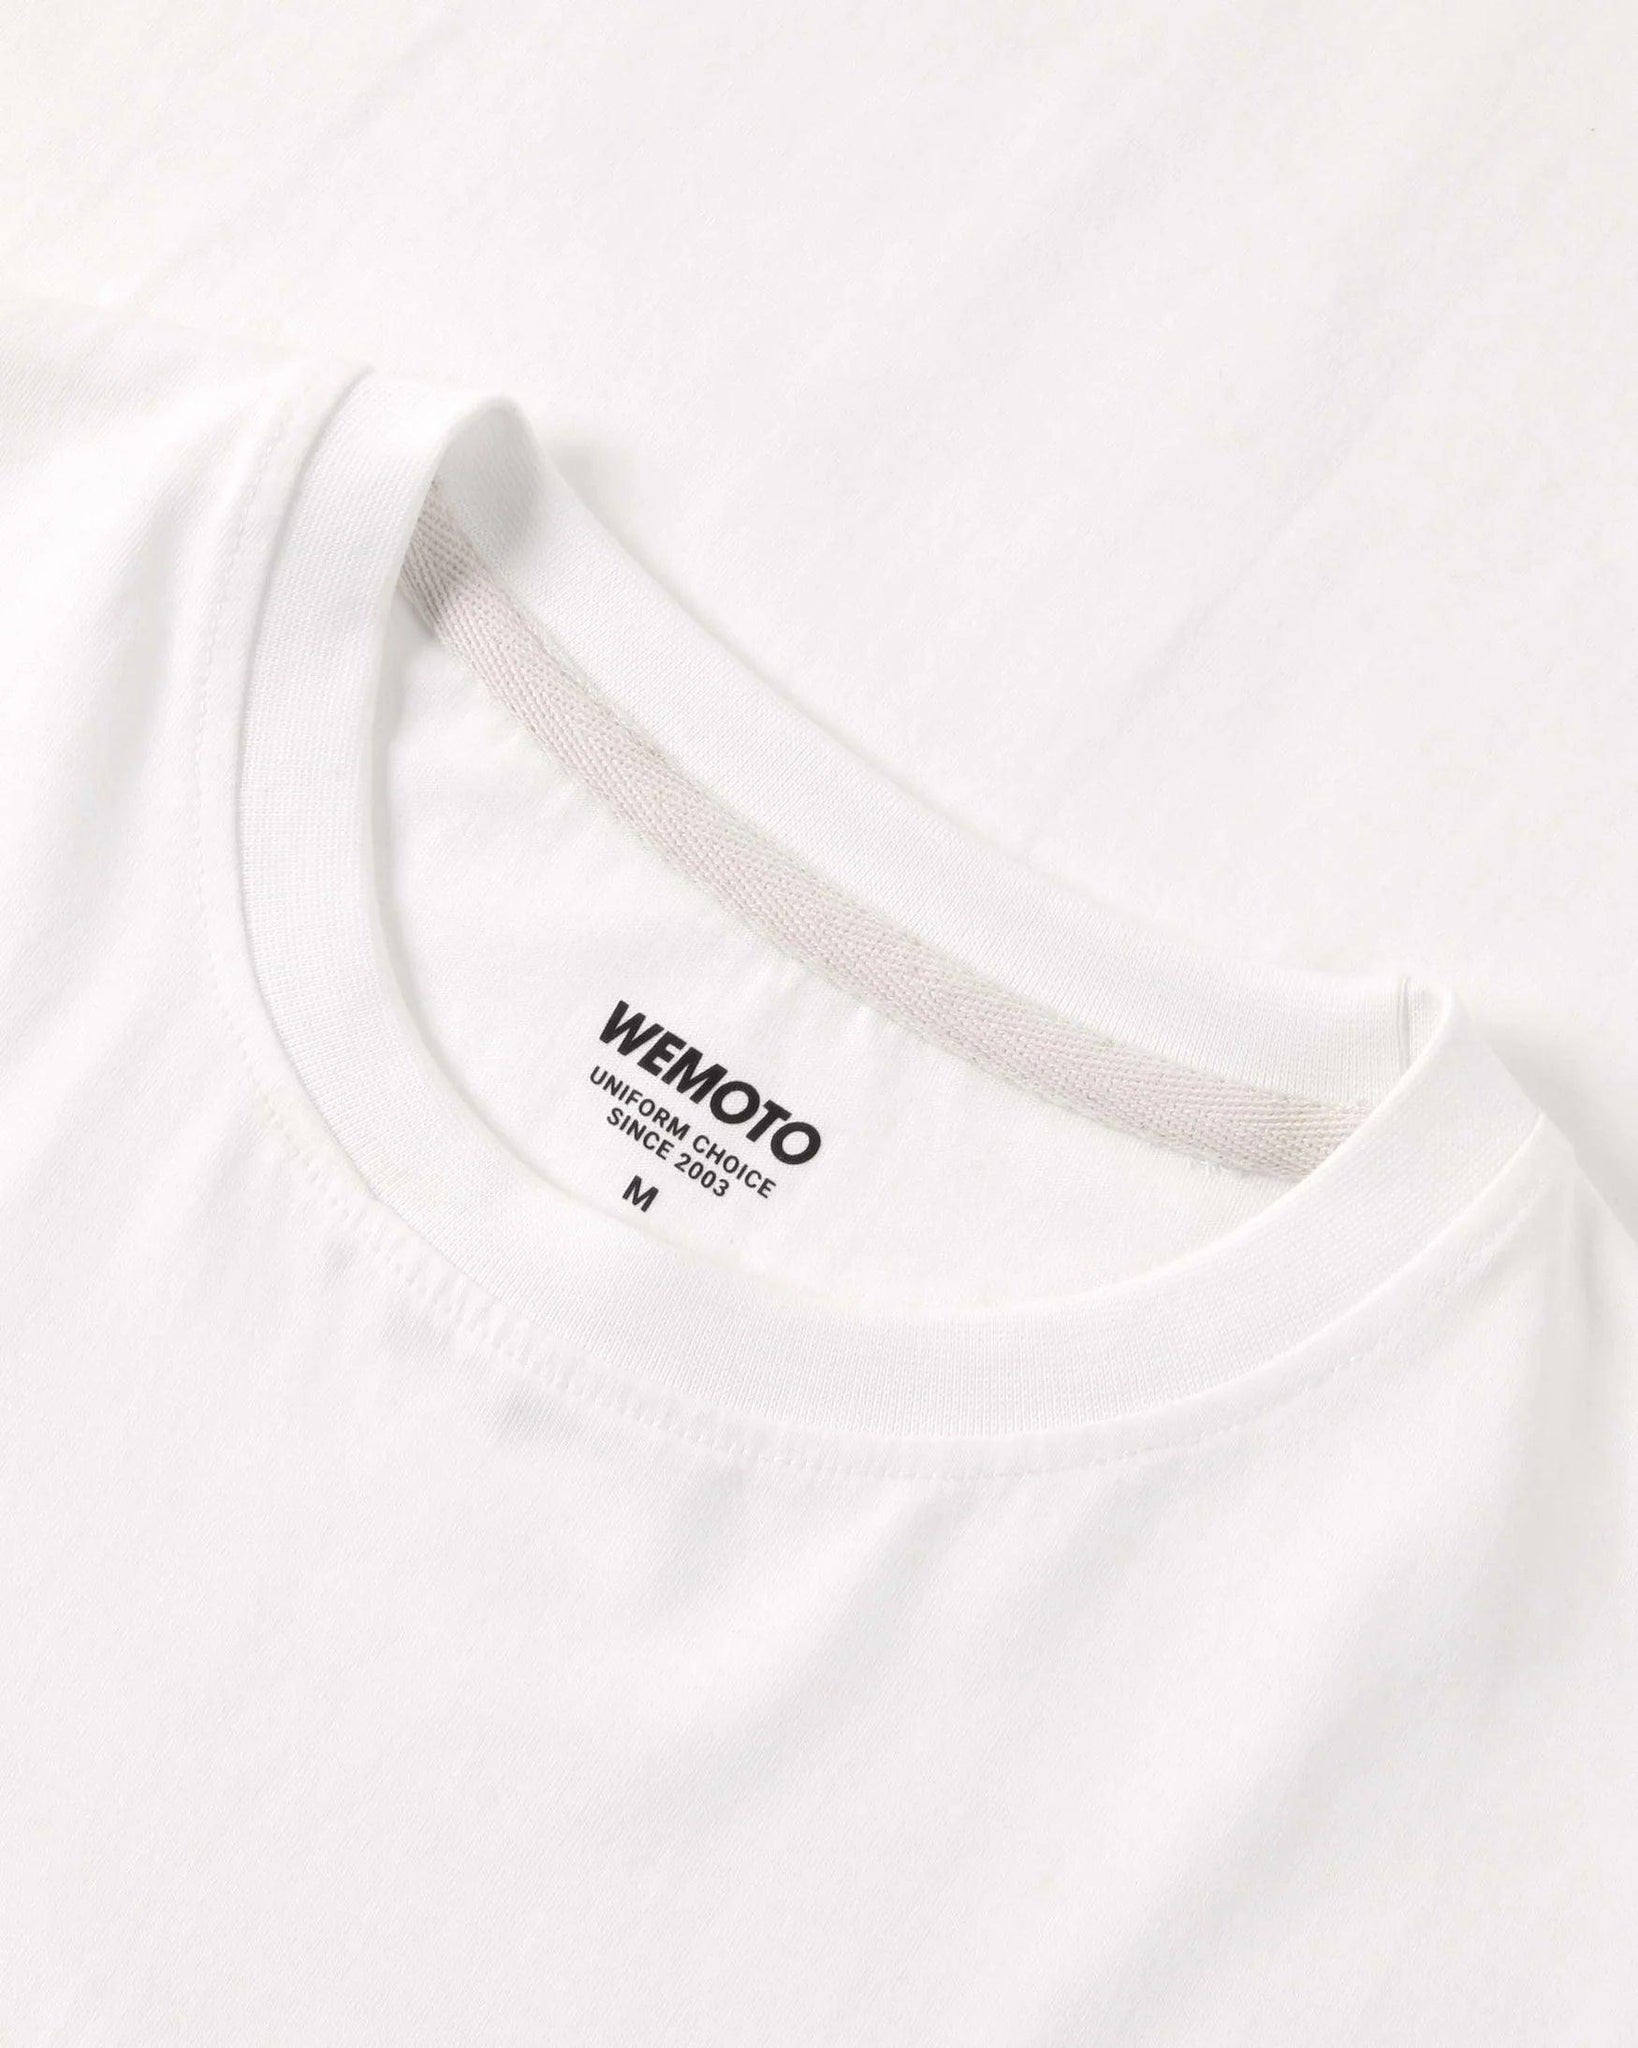 Camiseta WEMOTO Market White - ECRU